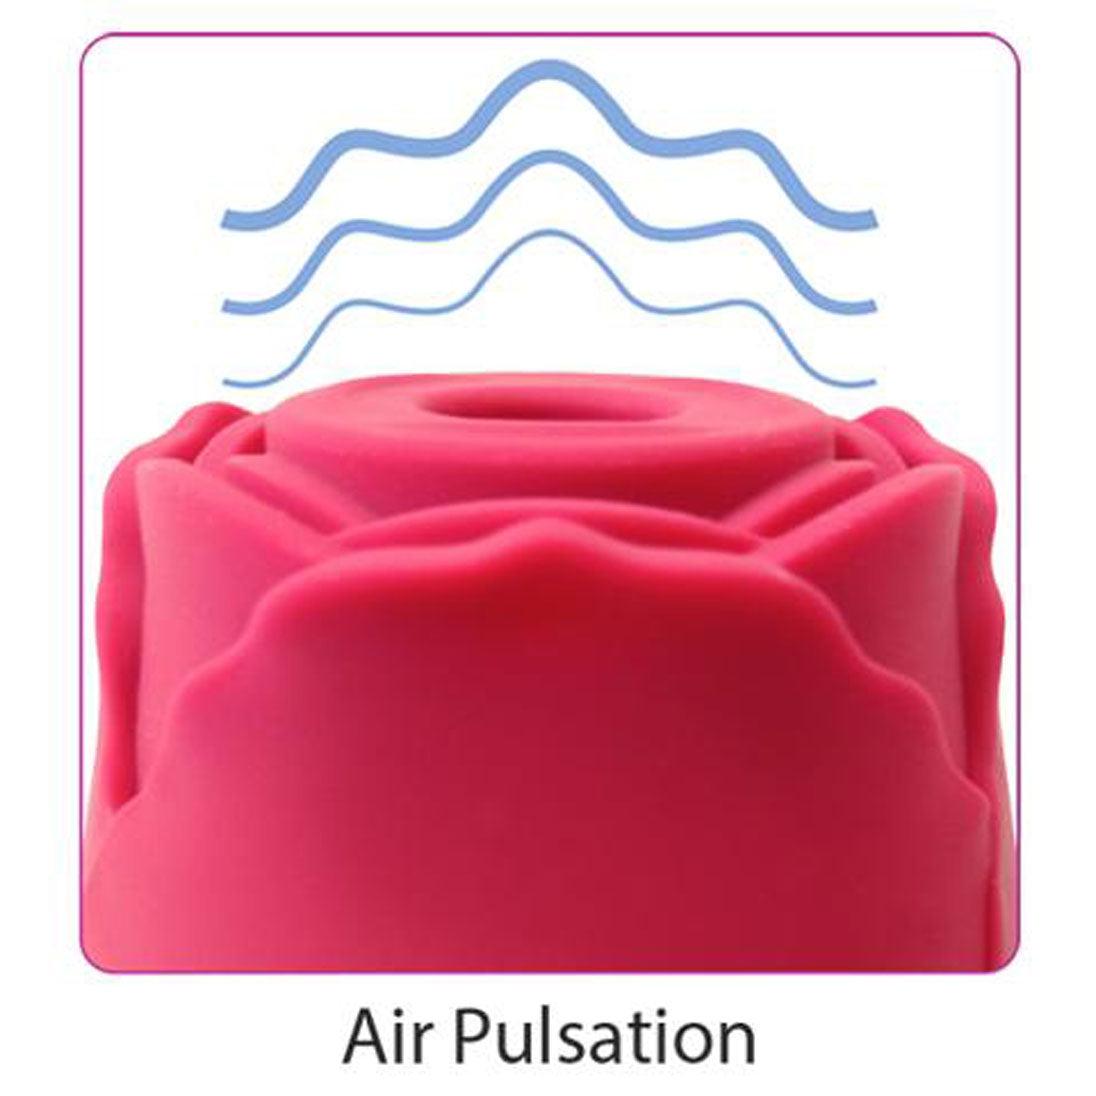 Rose Suction Stimulator - Red